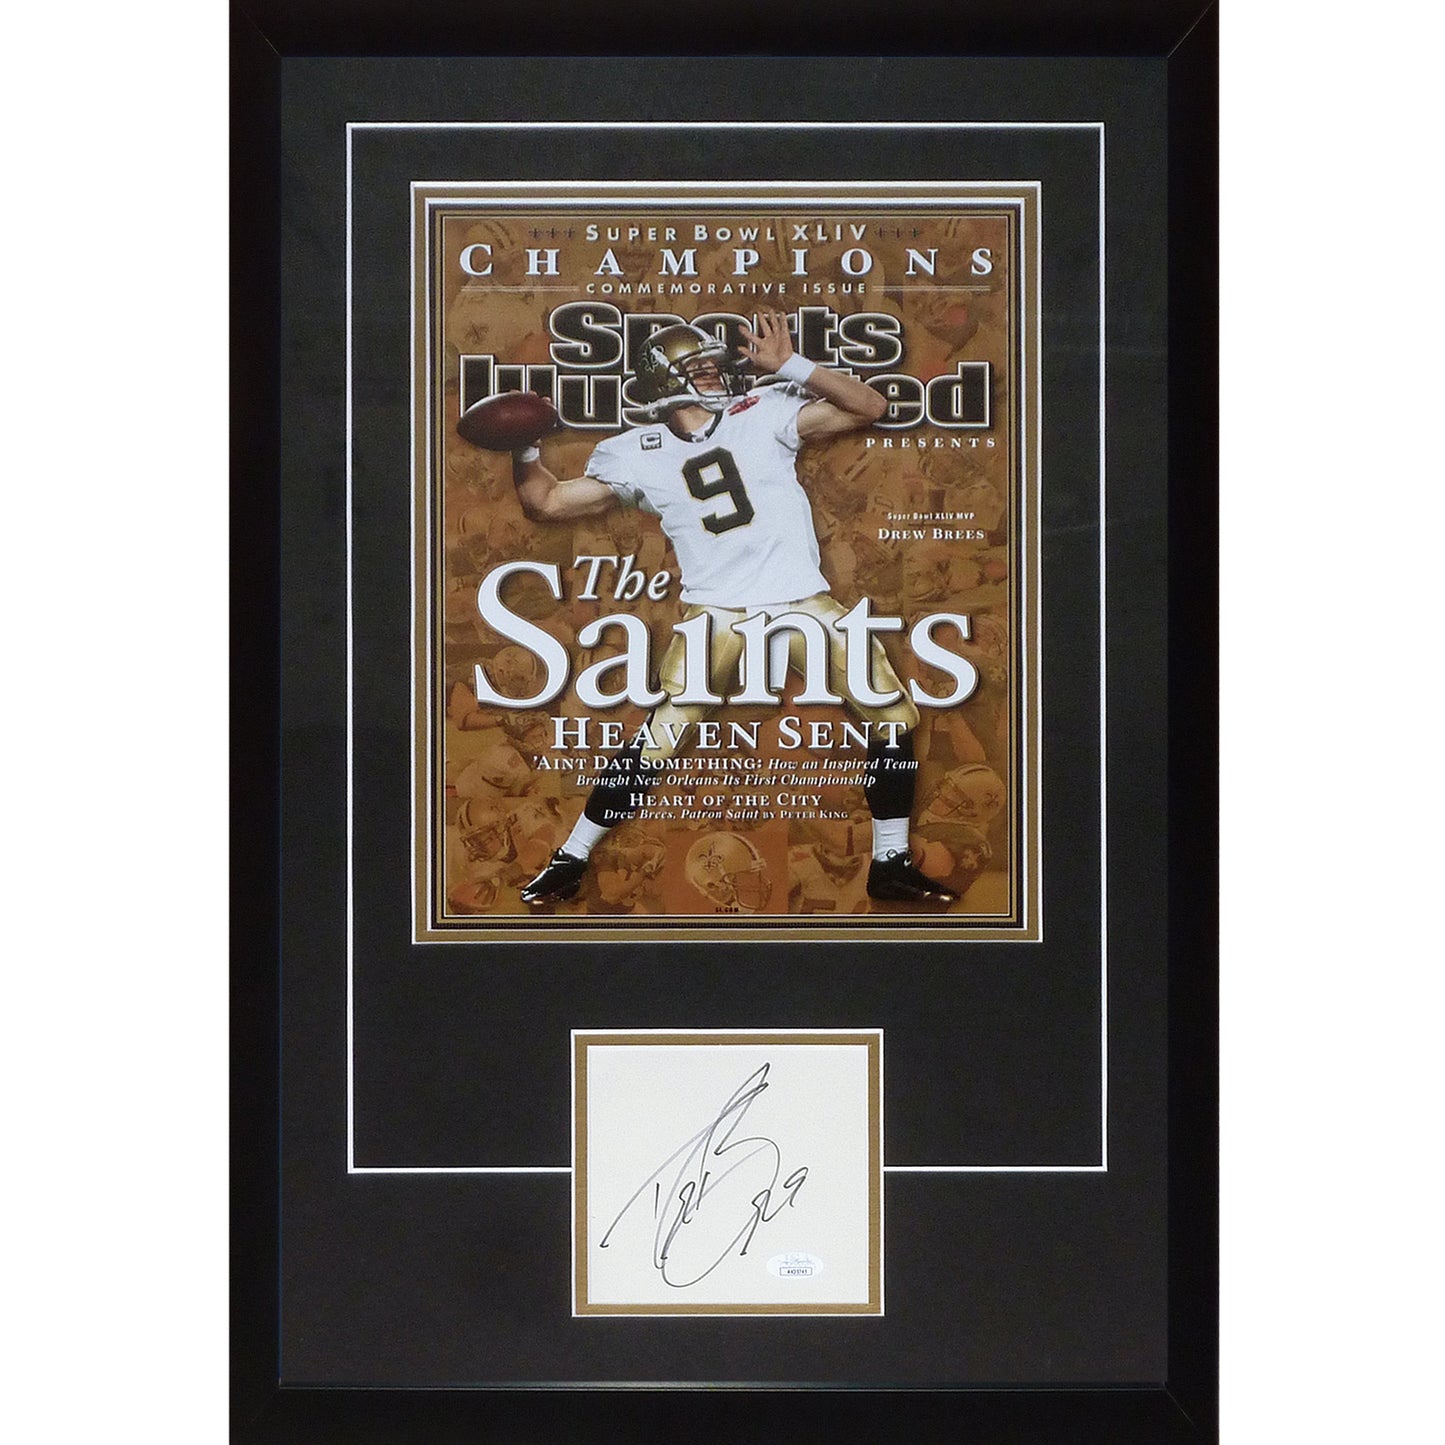 Drew Brees Autographed New Orleans Saints (Super Bowl SI Poster) Deluxe Framed 11x14 Photo Piece - JSA